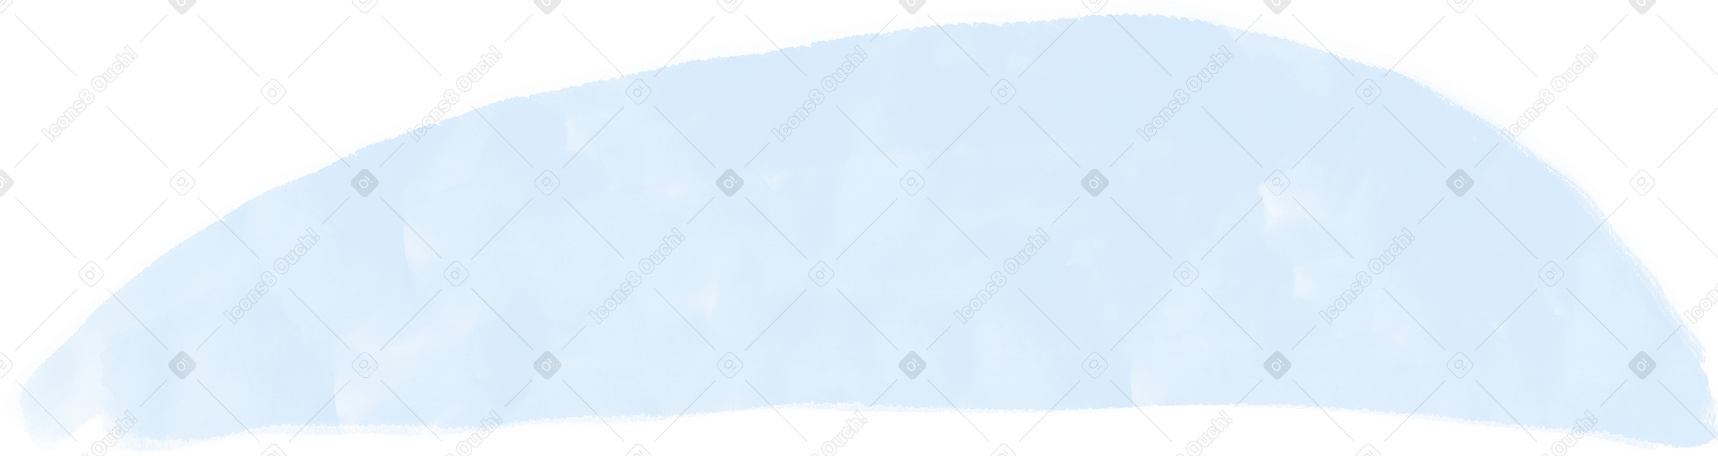 青い水平曲線形状 PNG、SVG